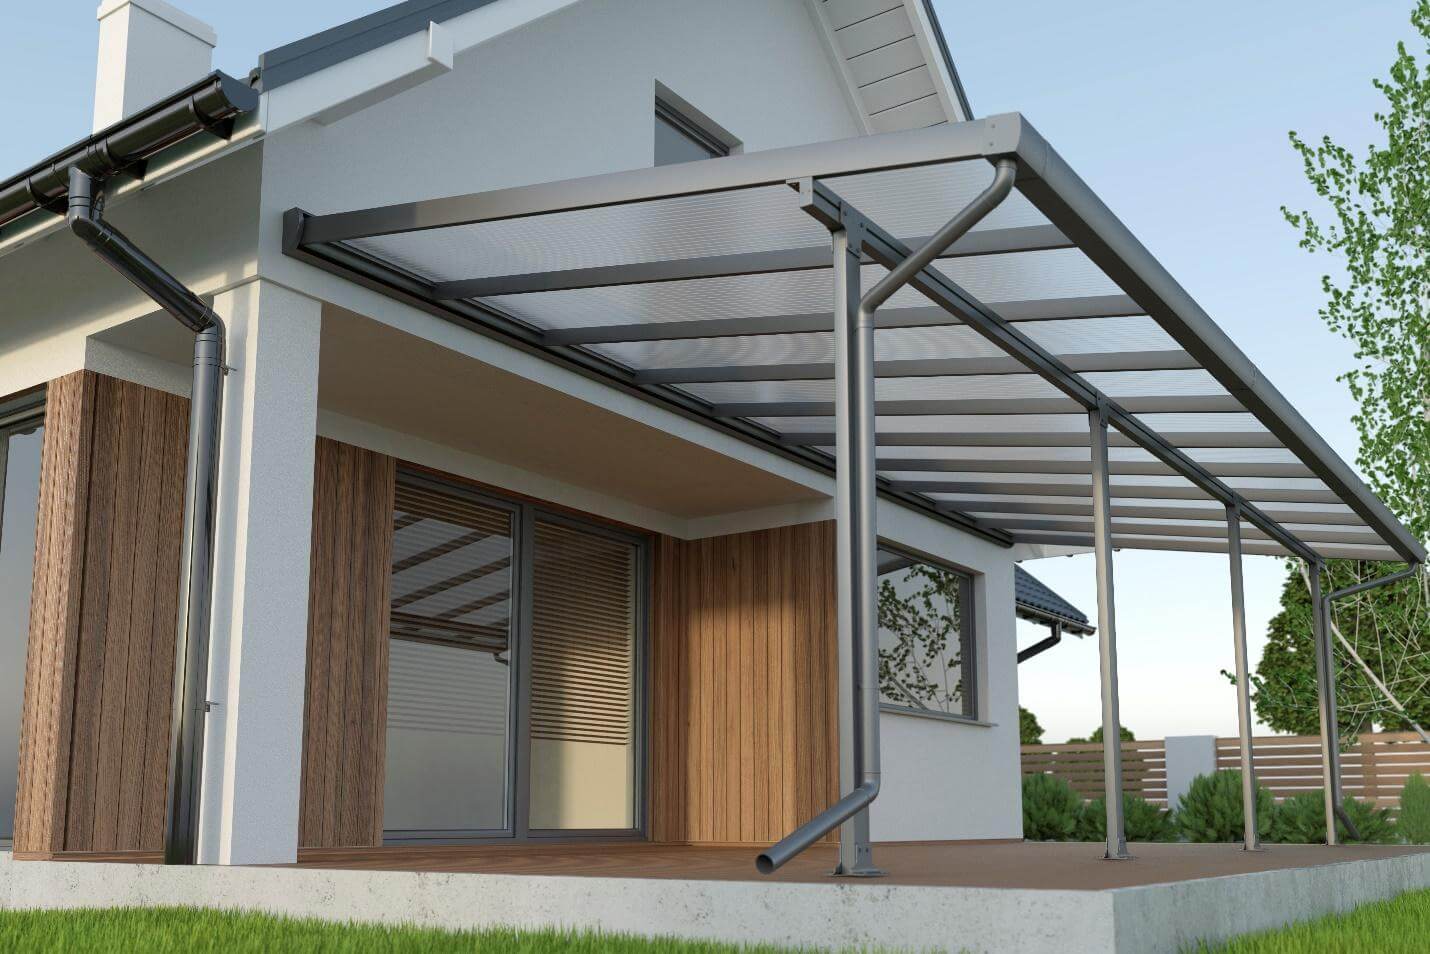 We supply and install Laminated Glass Canopies and Pergolas in Nairobi Kenya